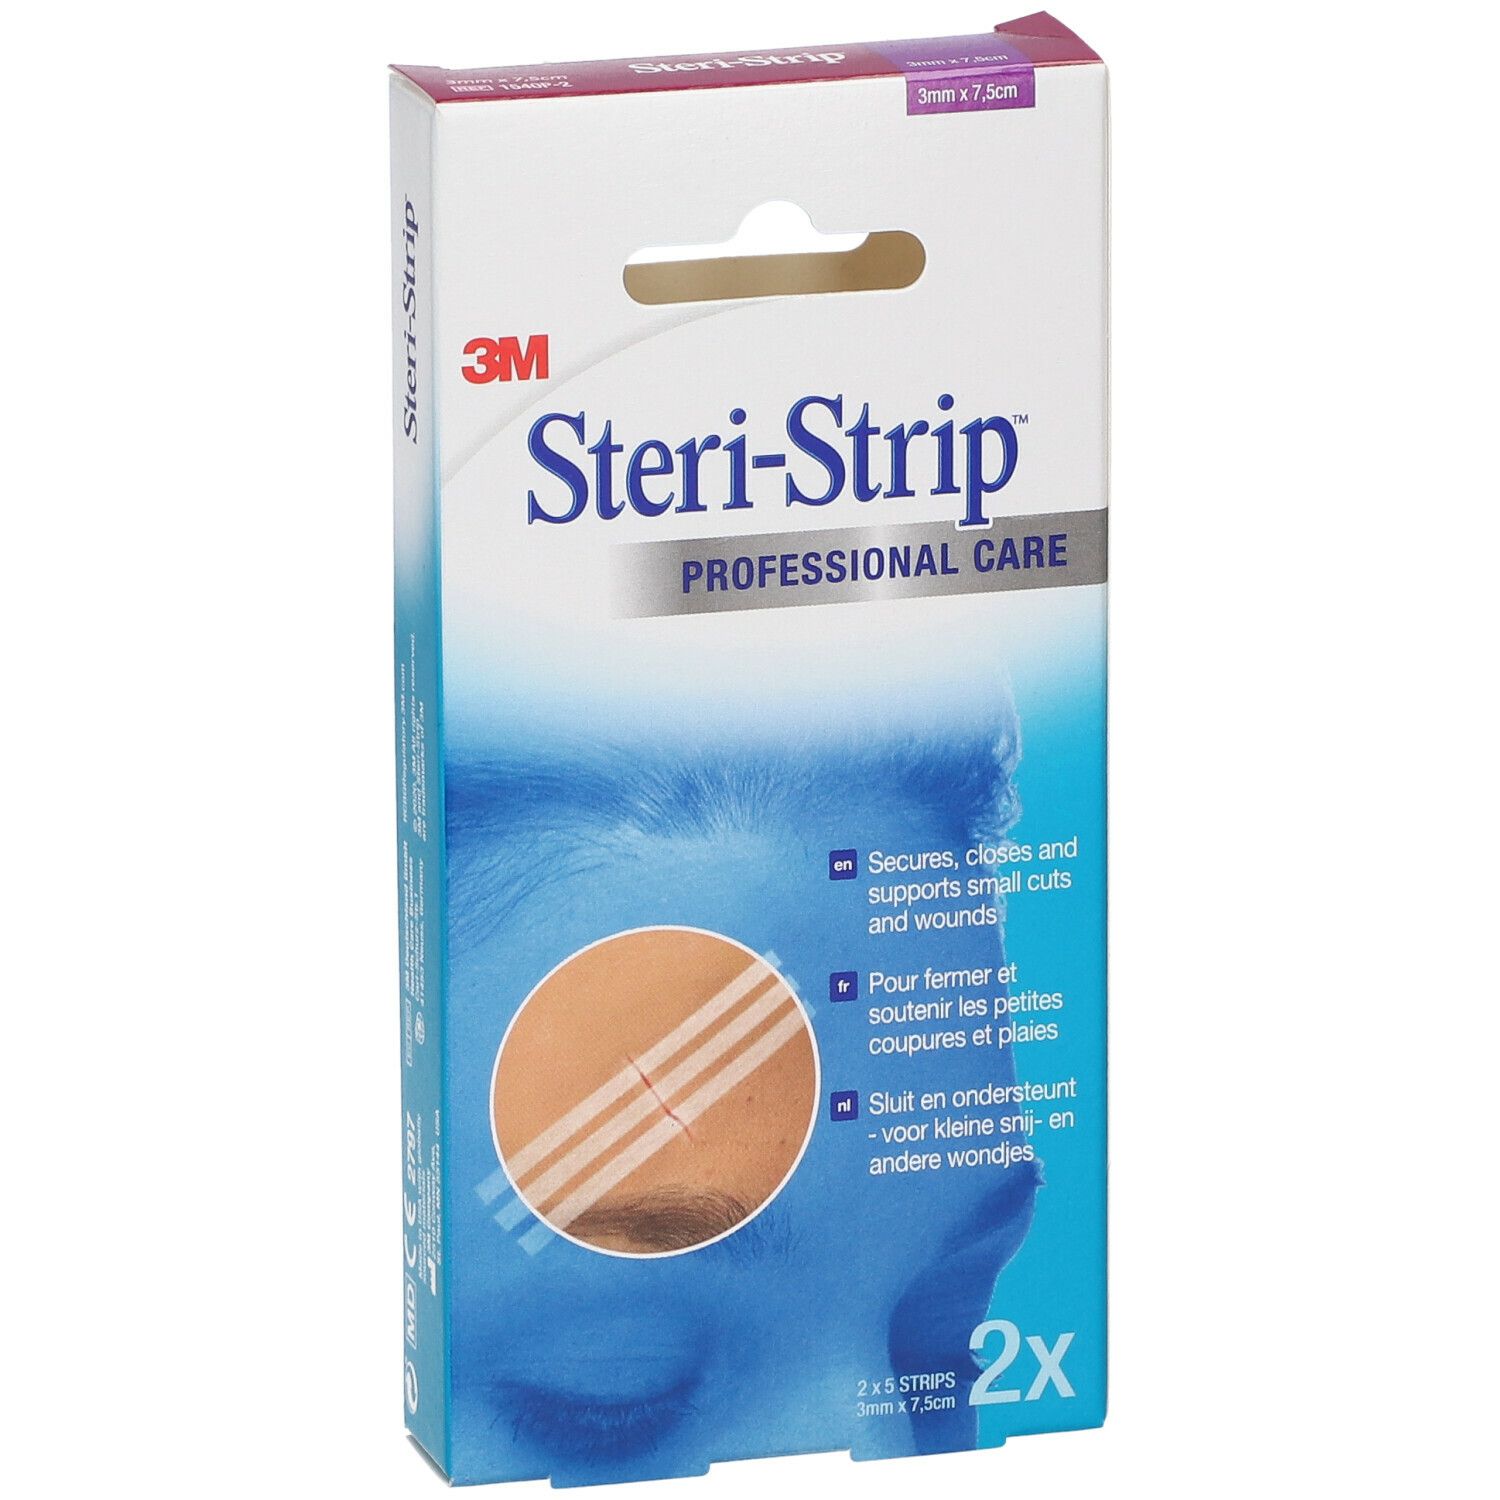 3M Steri-Strip stérile 3 mm x 75 mm